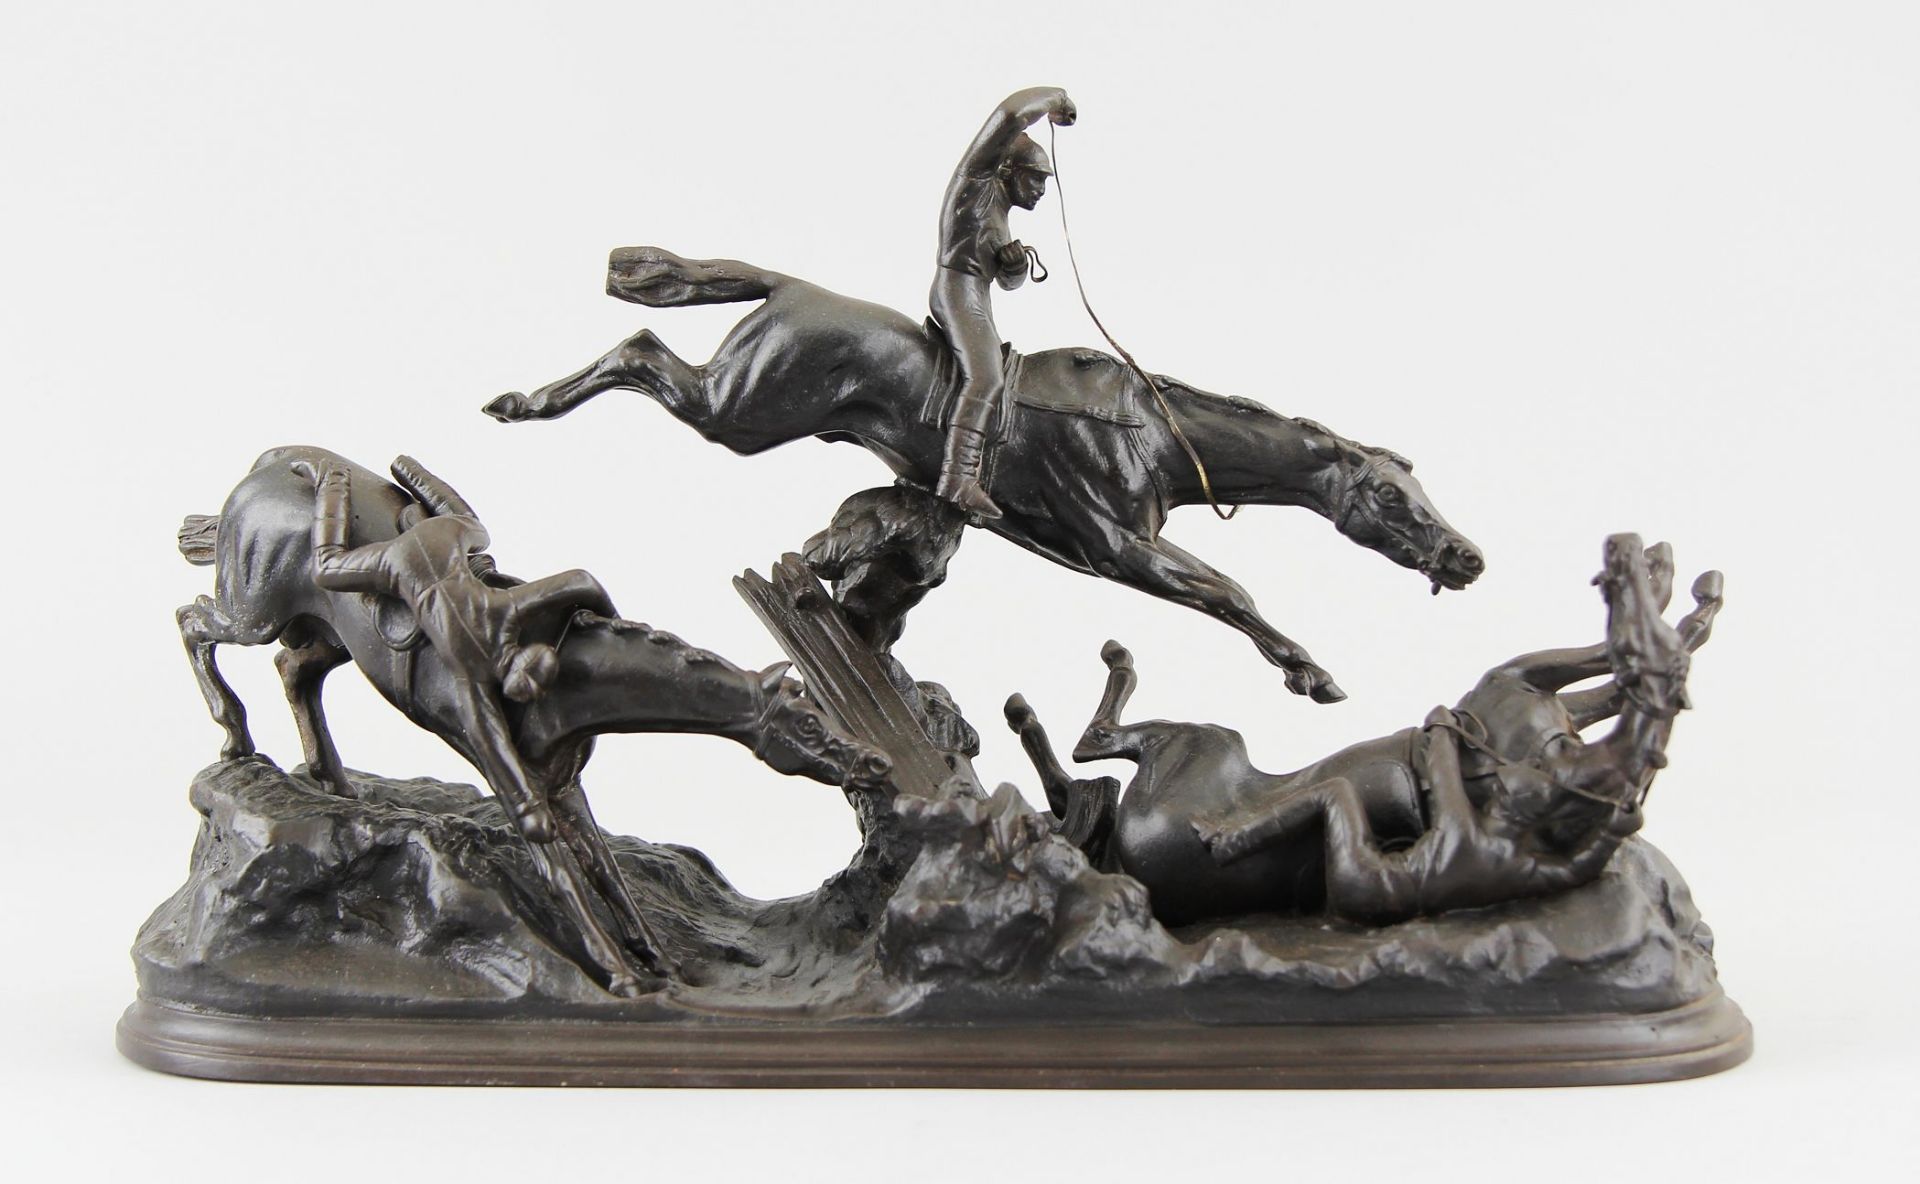 English sculptor of the 19th century Figure "Steeplechase fiasco", patinated iron cast, original